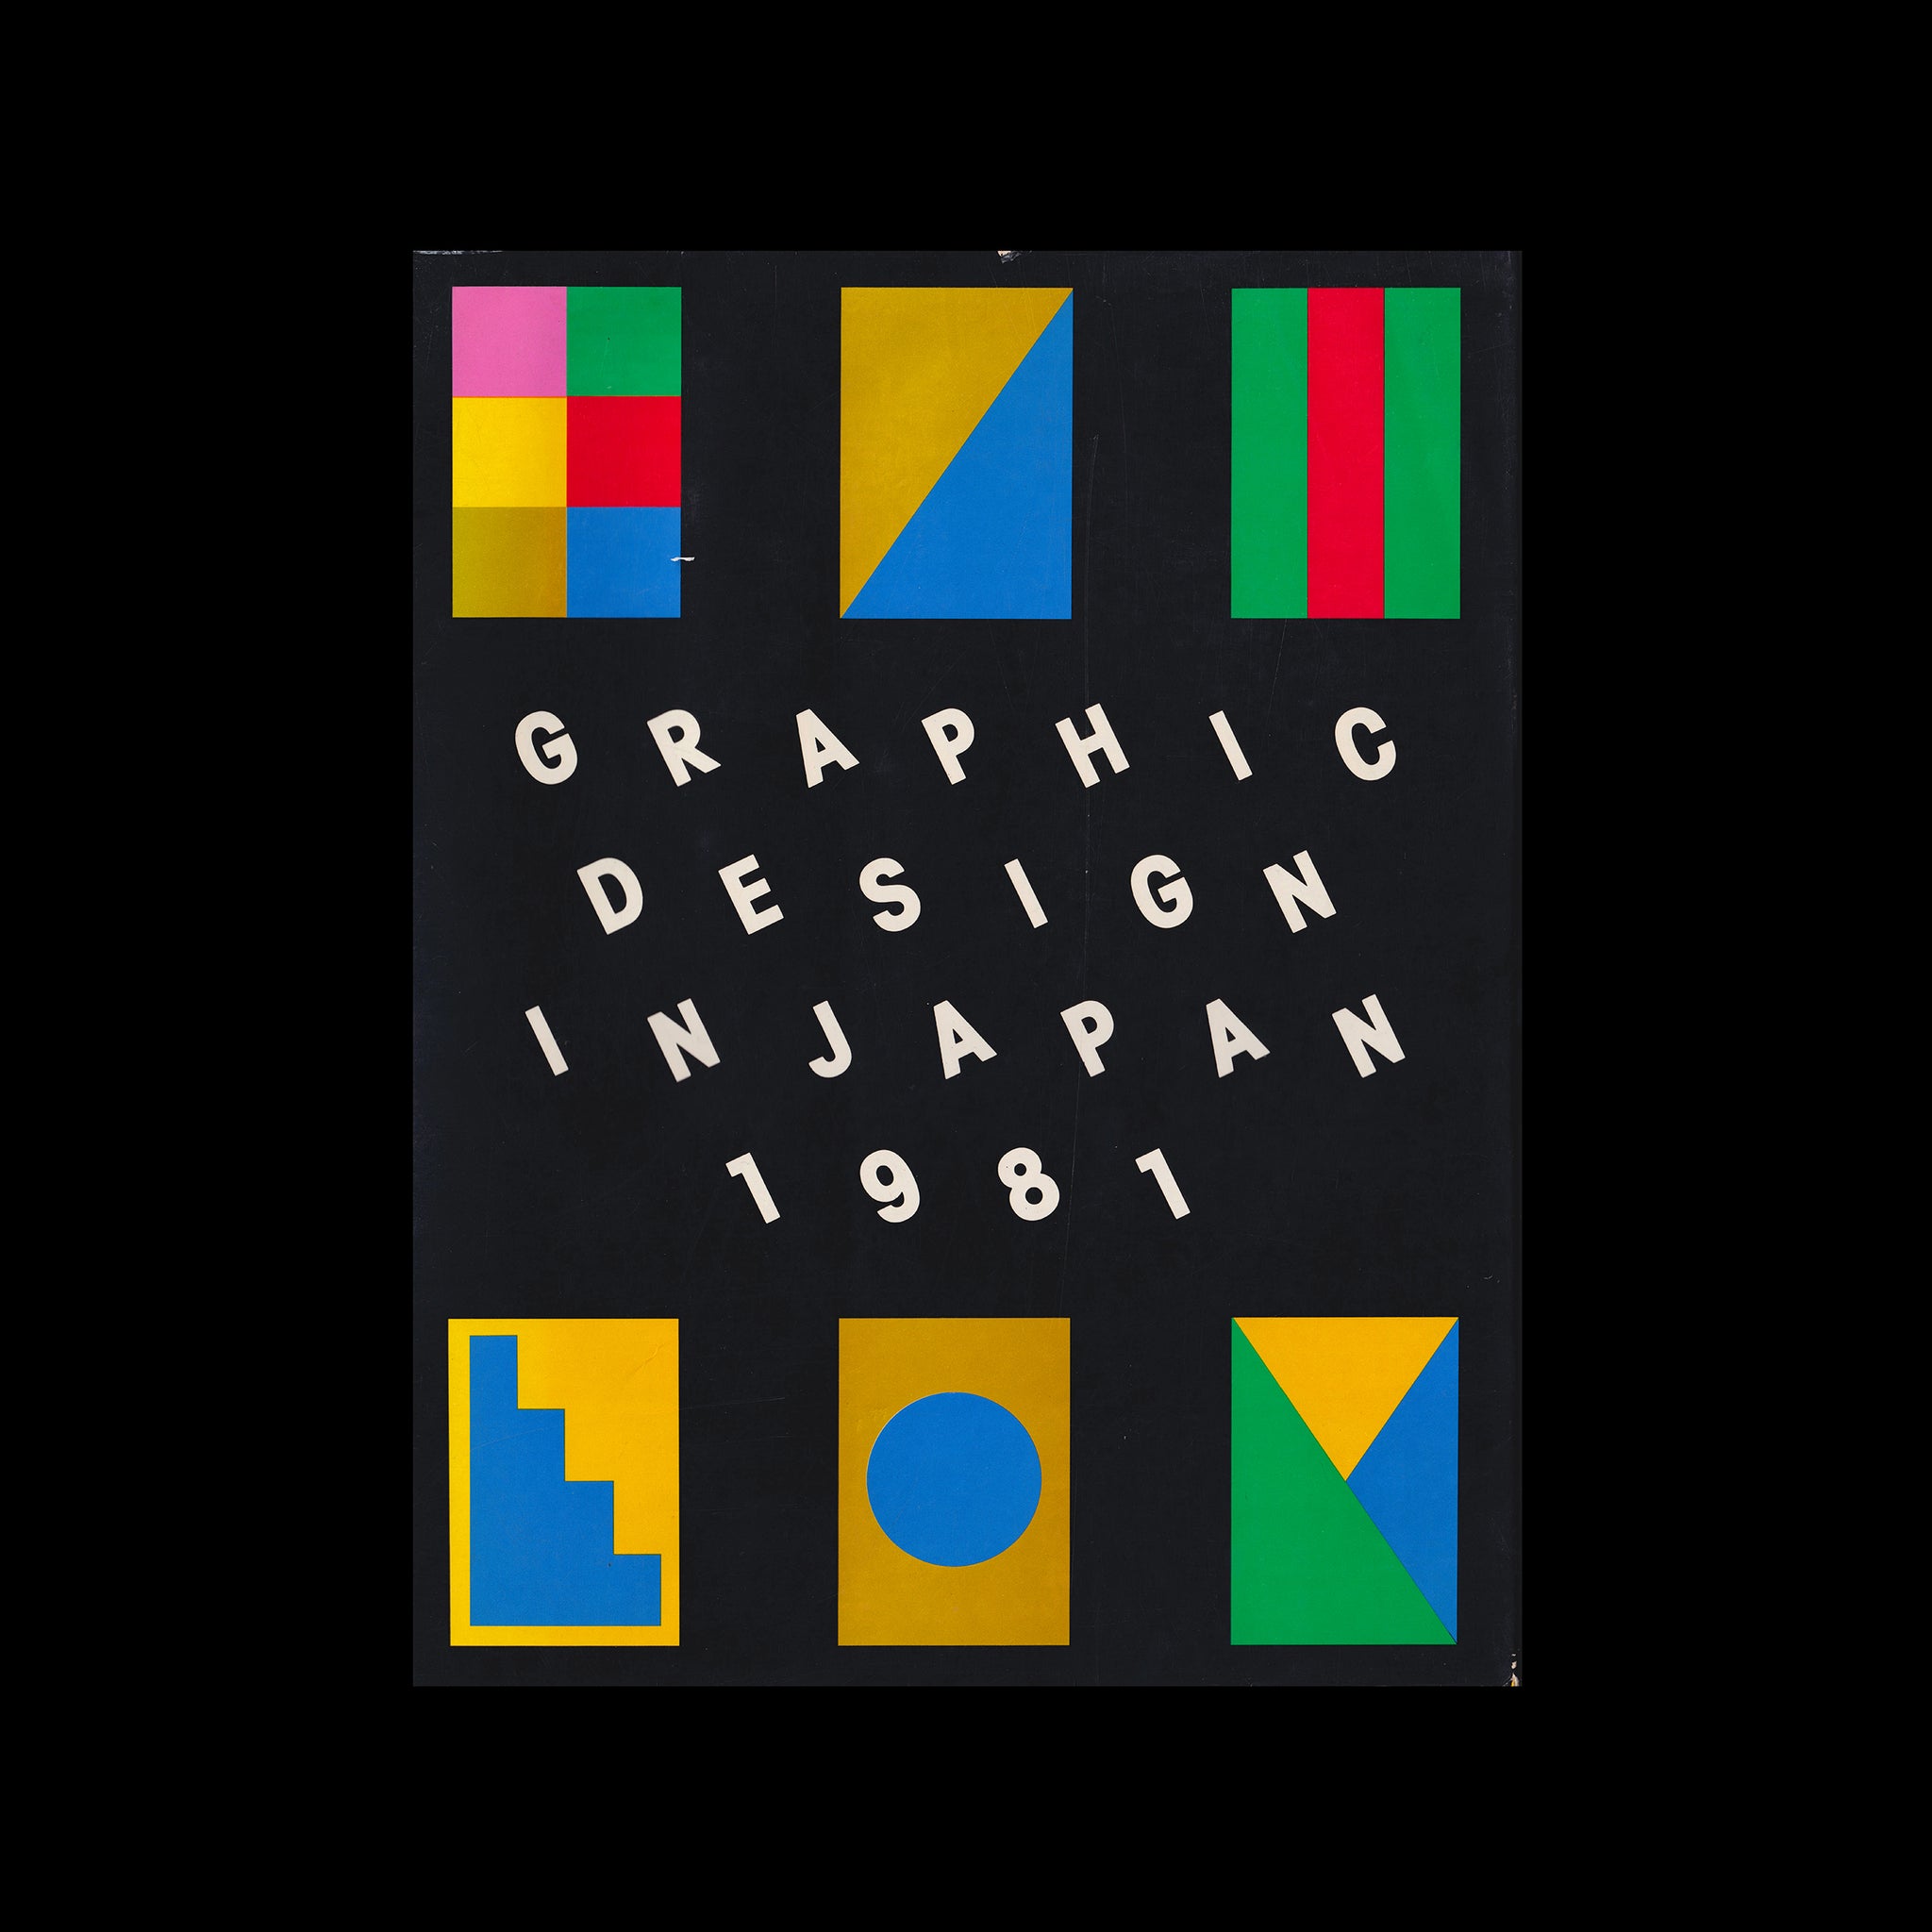 Graphic Design in Japan 1981